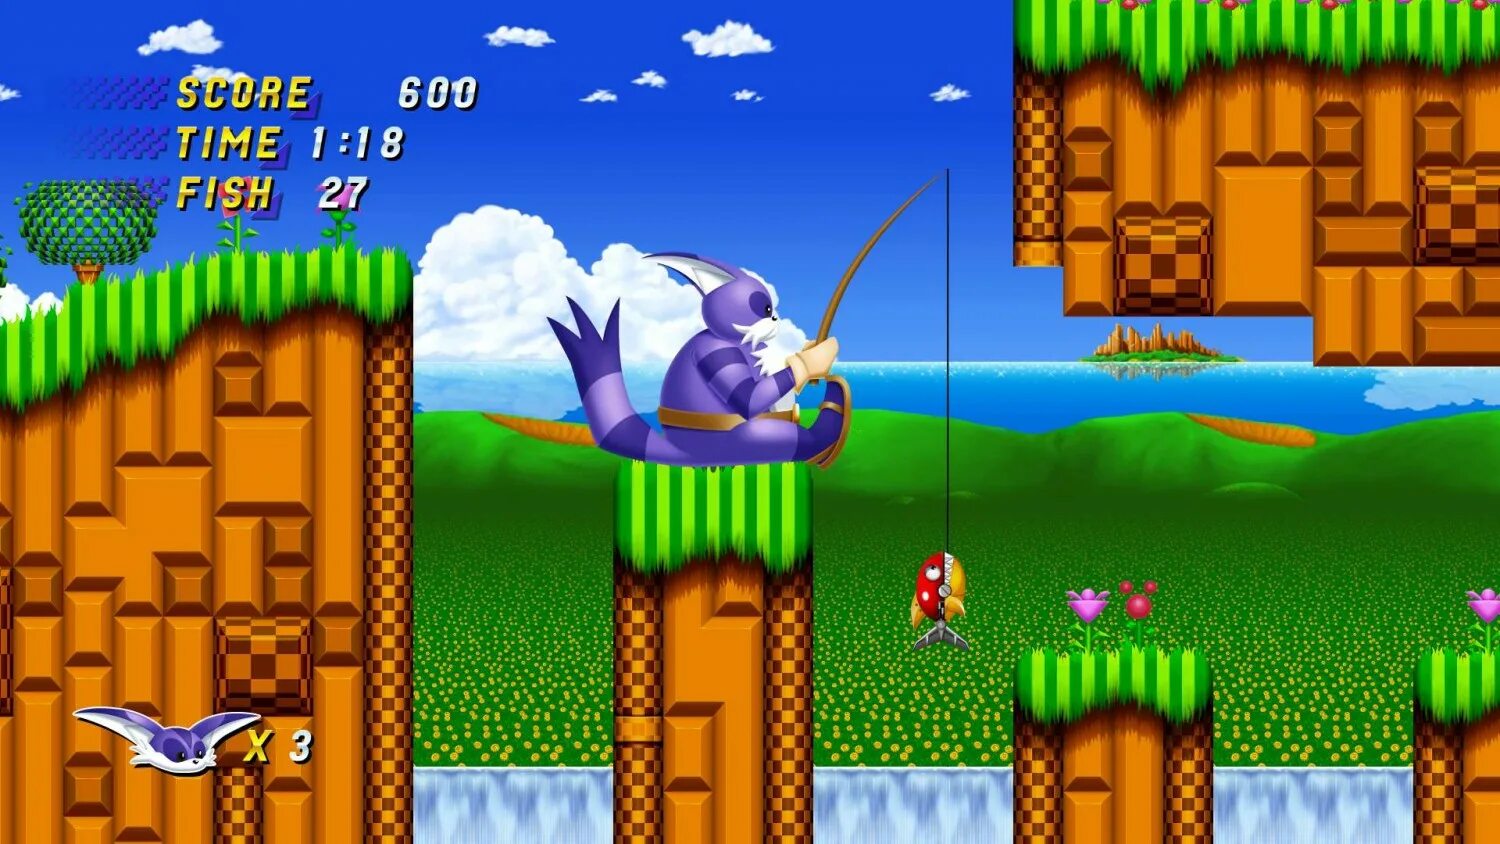 Sonic 1 версия. Игра Sonic the Hedgehog 2. Соник игра на сеге 2. Sonic 1991.